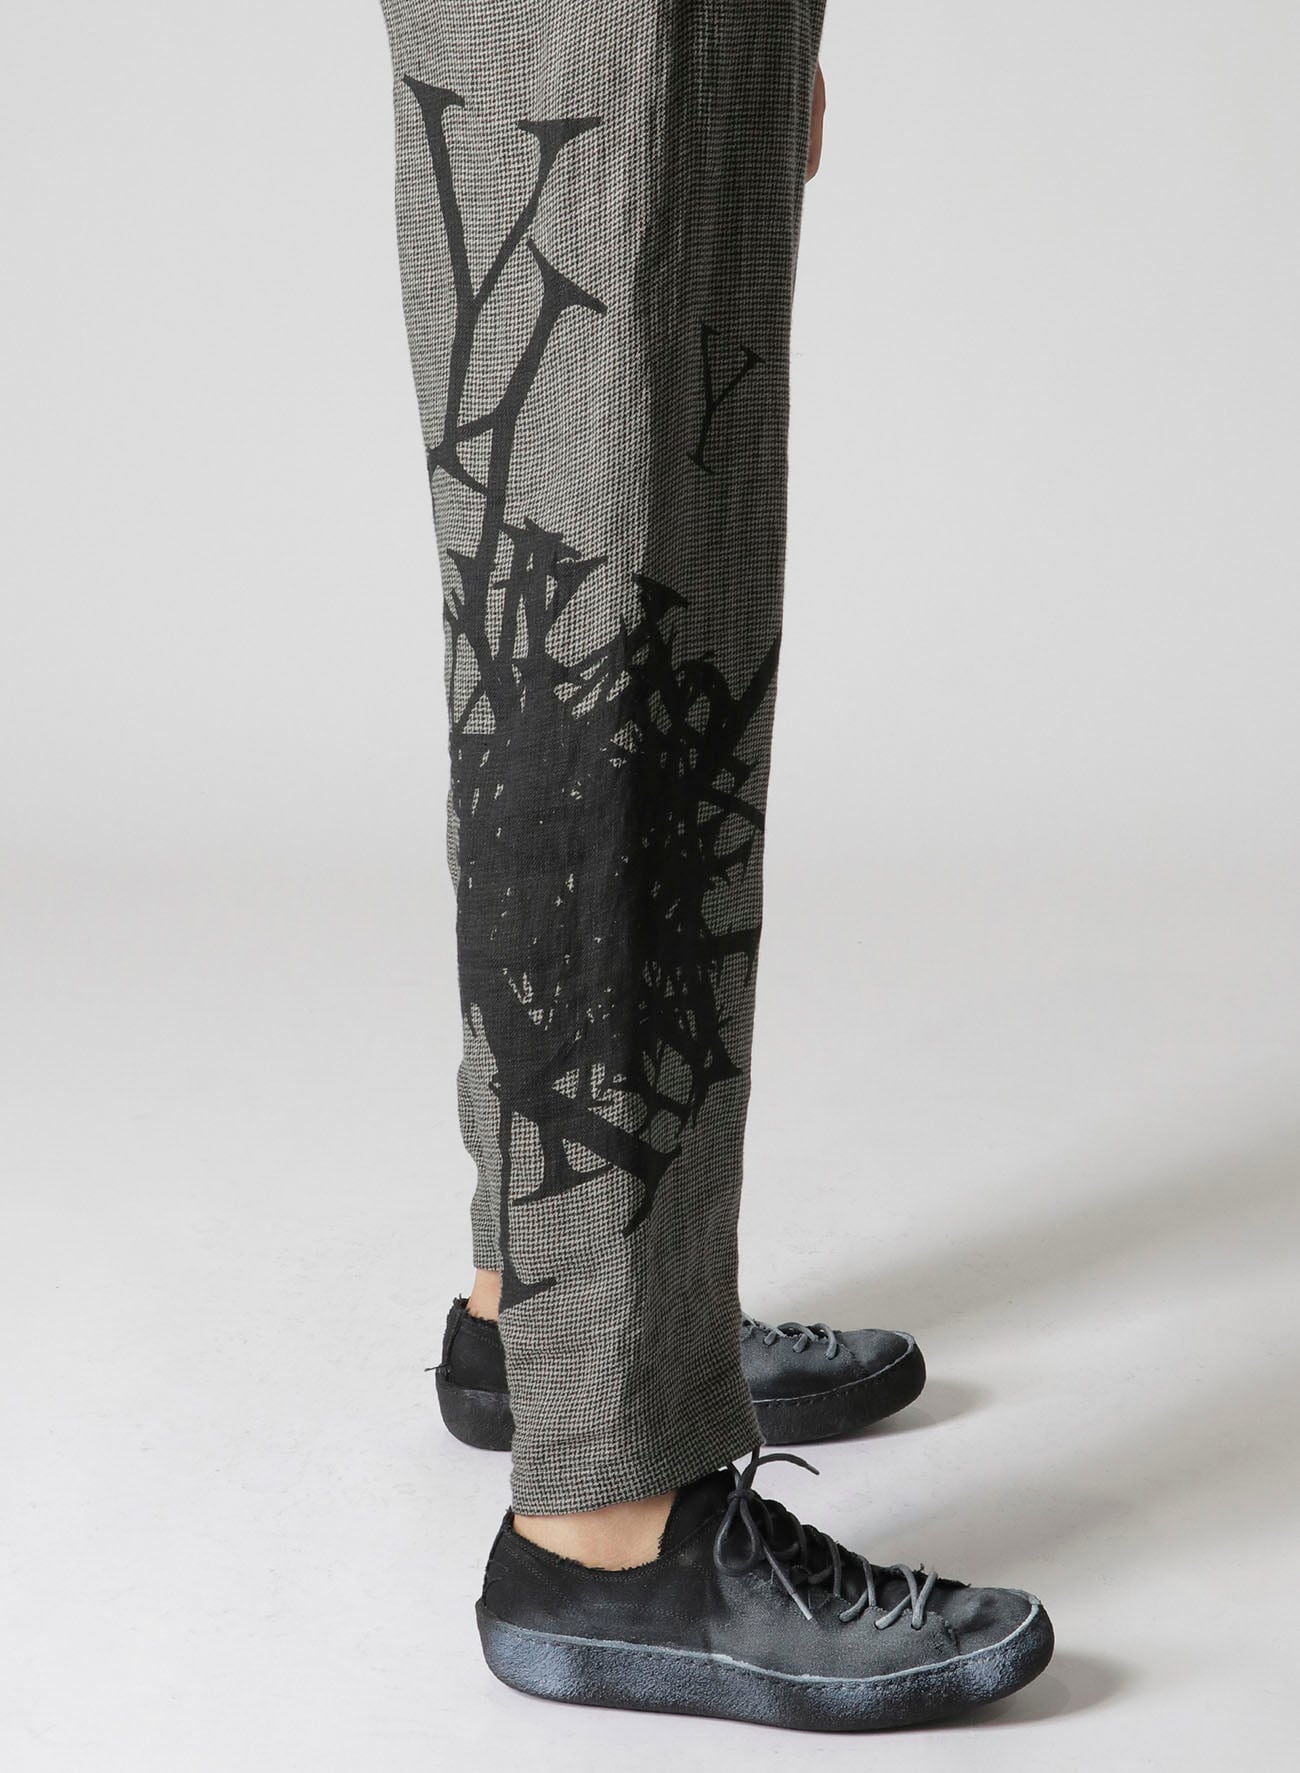 HOUNDSTOOTH PRINT PANTS(S Grey): Yohji Yamamoto POUR HOMME｜THE 